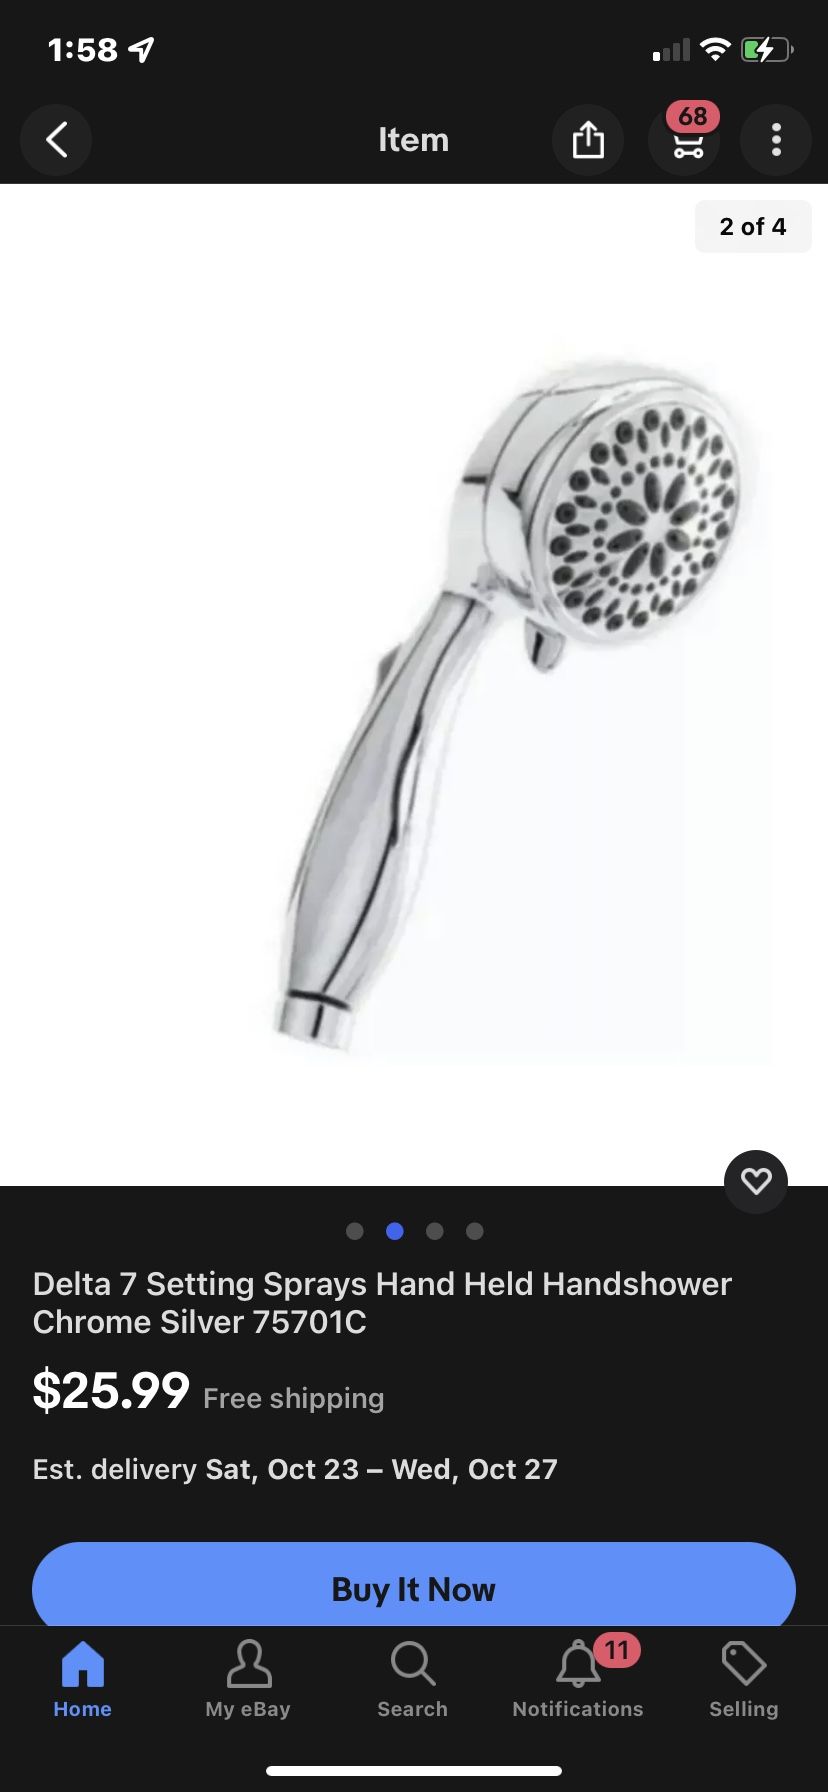 Delta 7 Setting Sprays Hand Held Handshower Chrome Silver 75701C